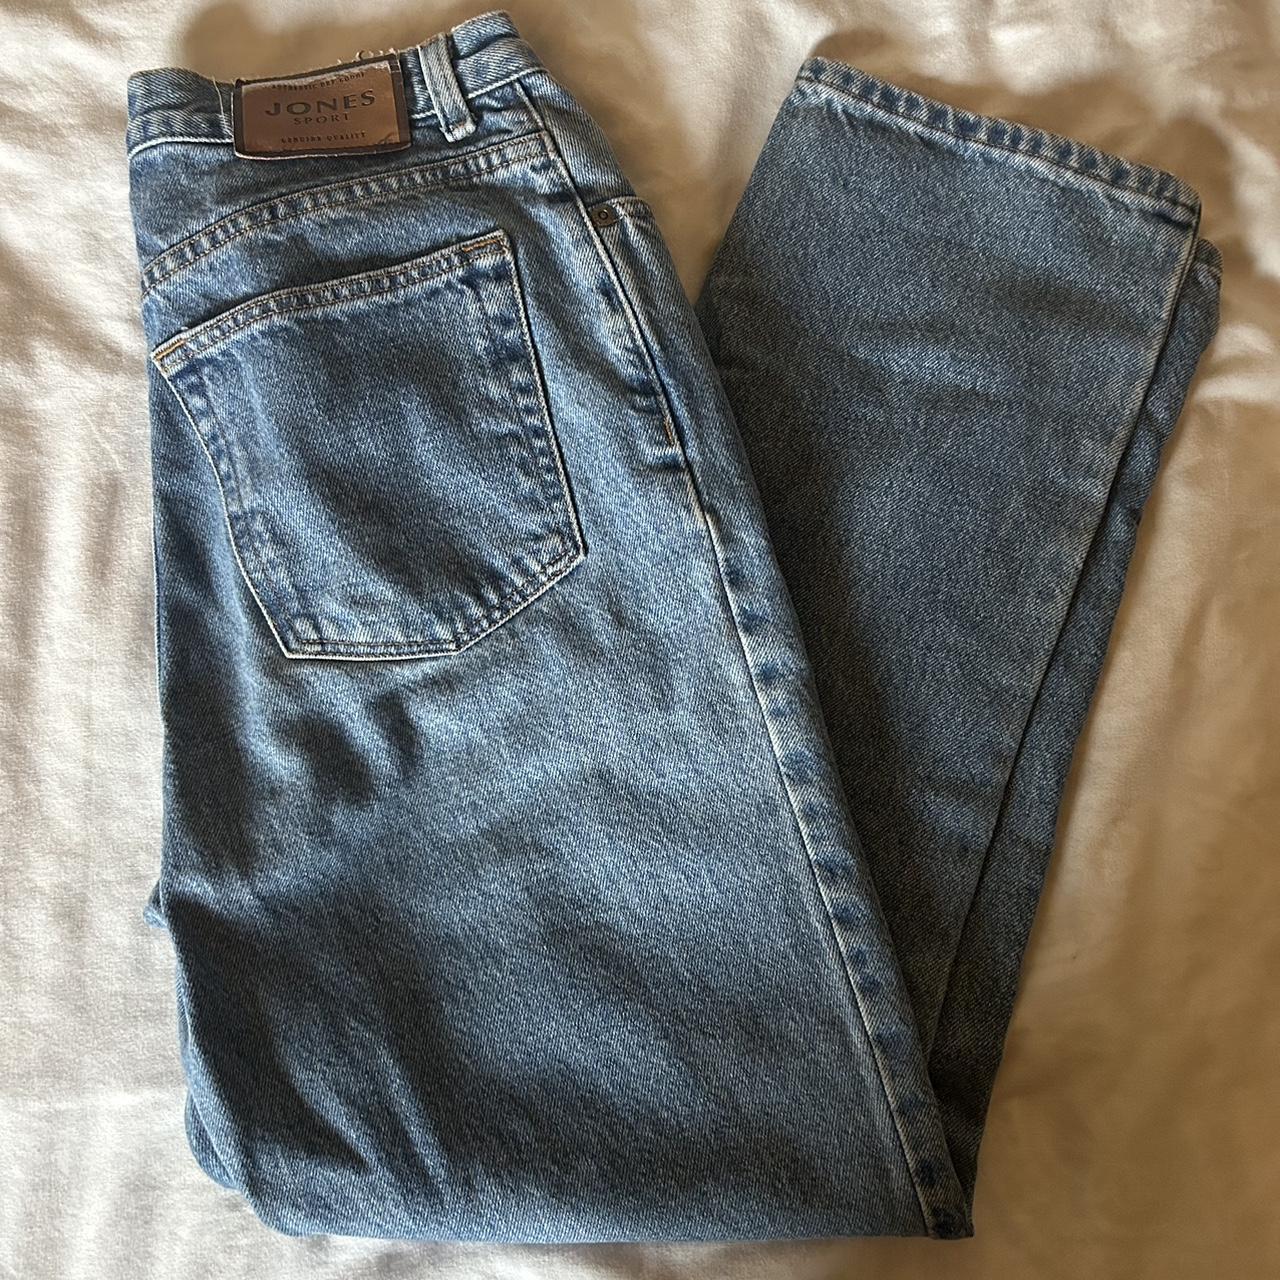 Jones mom jeans size 10 #momjeans #denim... - Depop